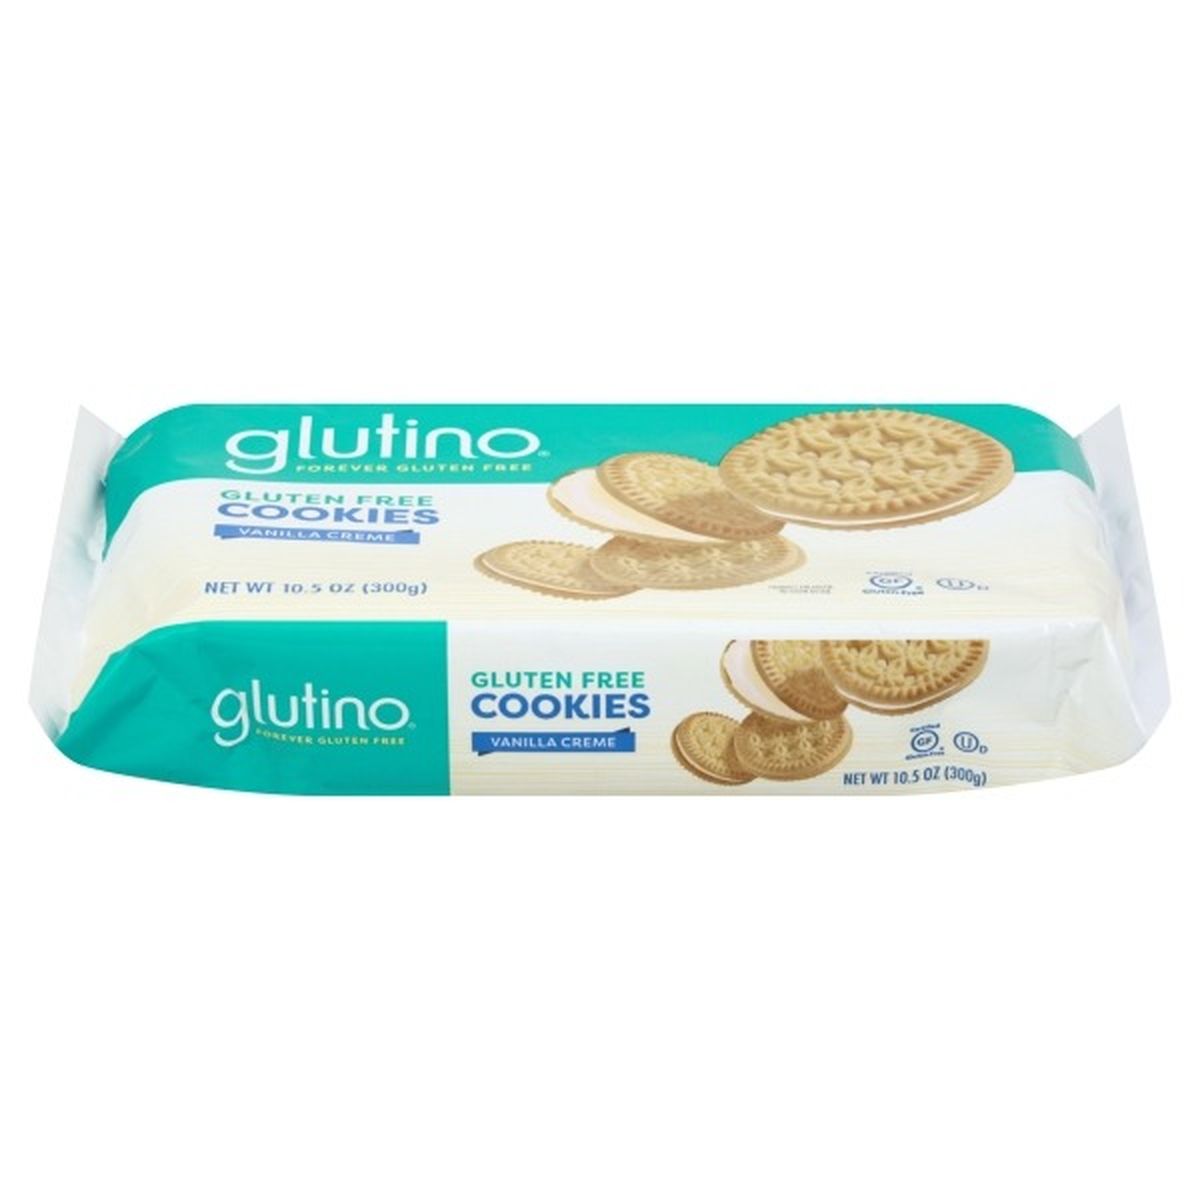 Calories in Glutino Cookies, Gluten Free, Vanilla Creme